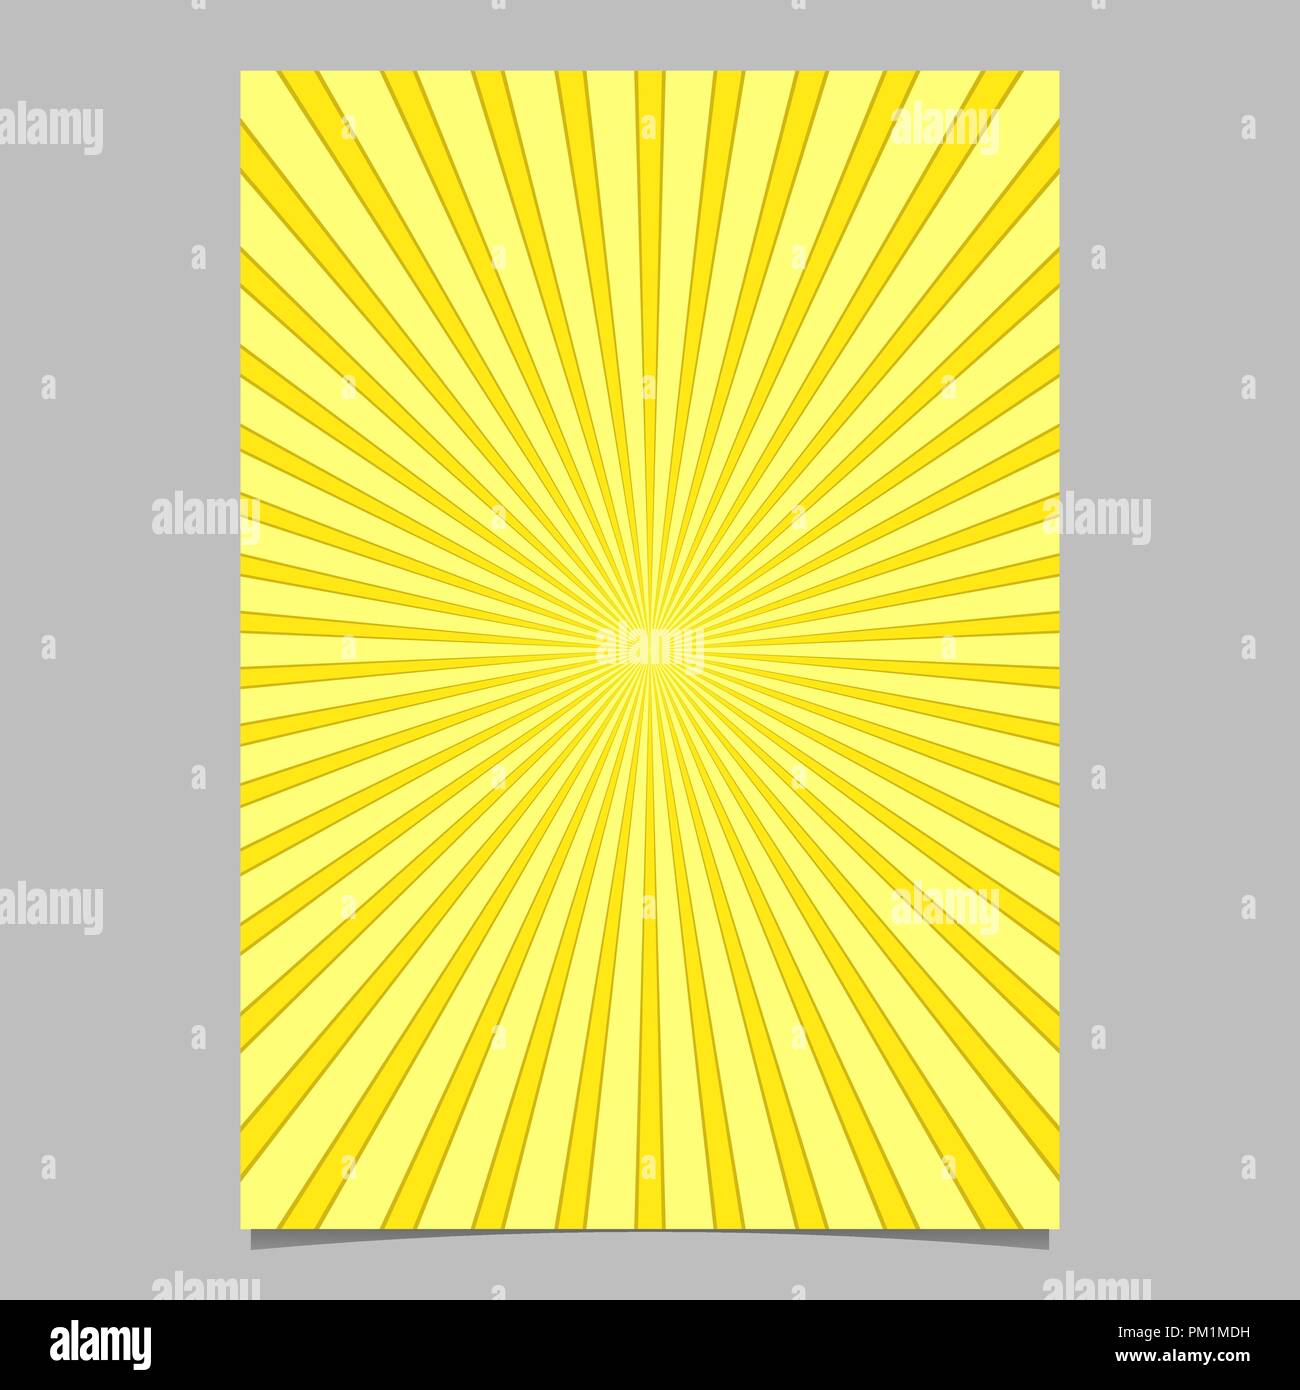 Retro abstract sunburst brochure cover template - vector flyer background Stock Vector